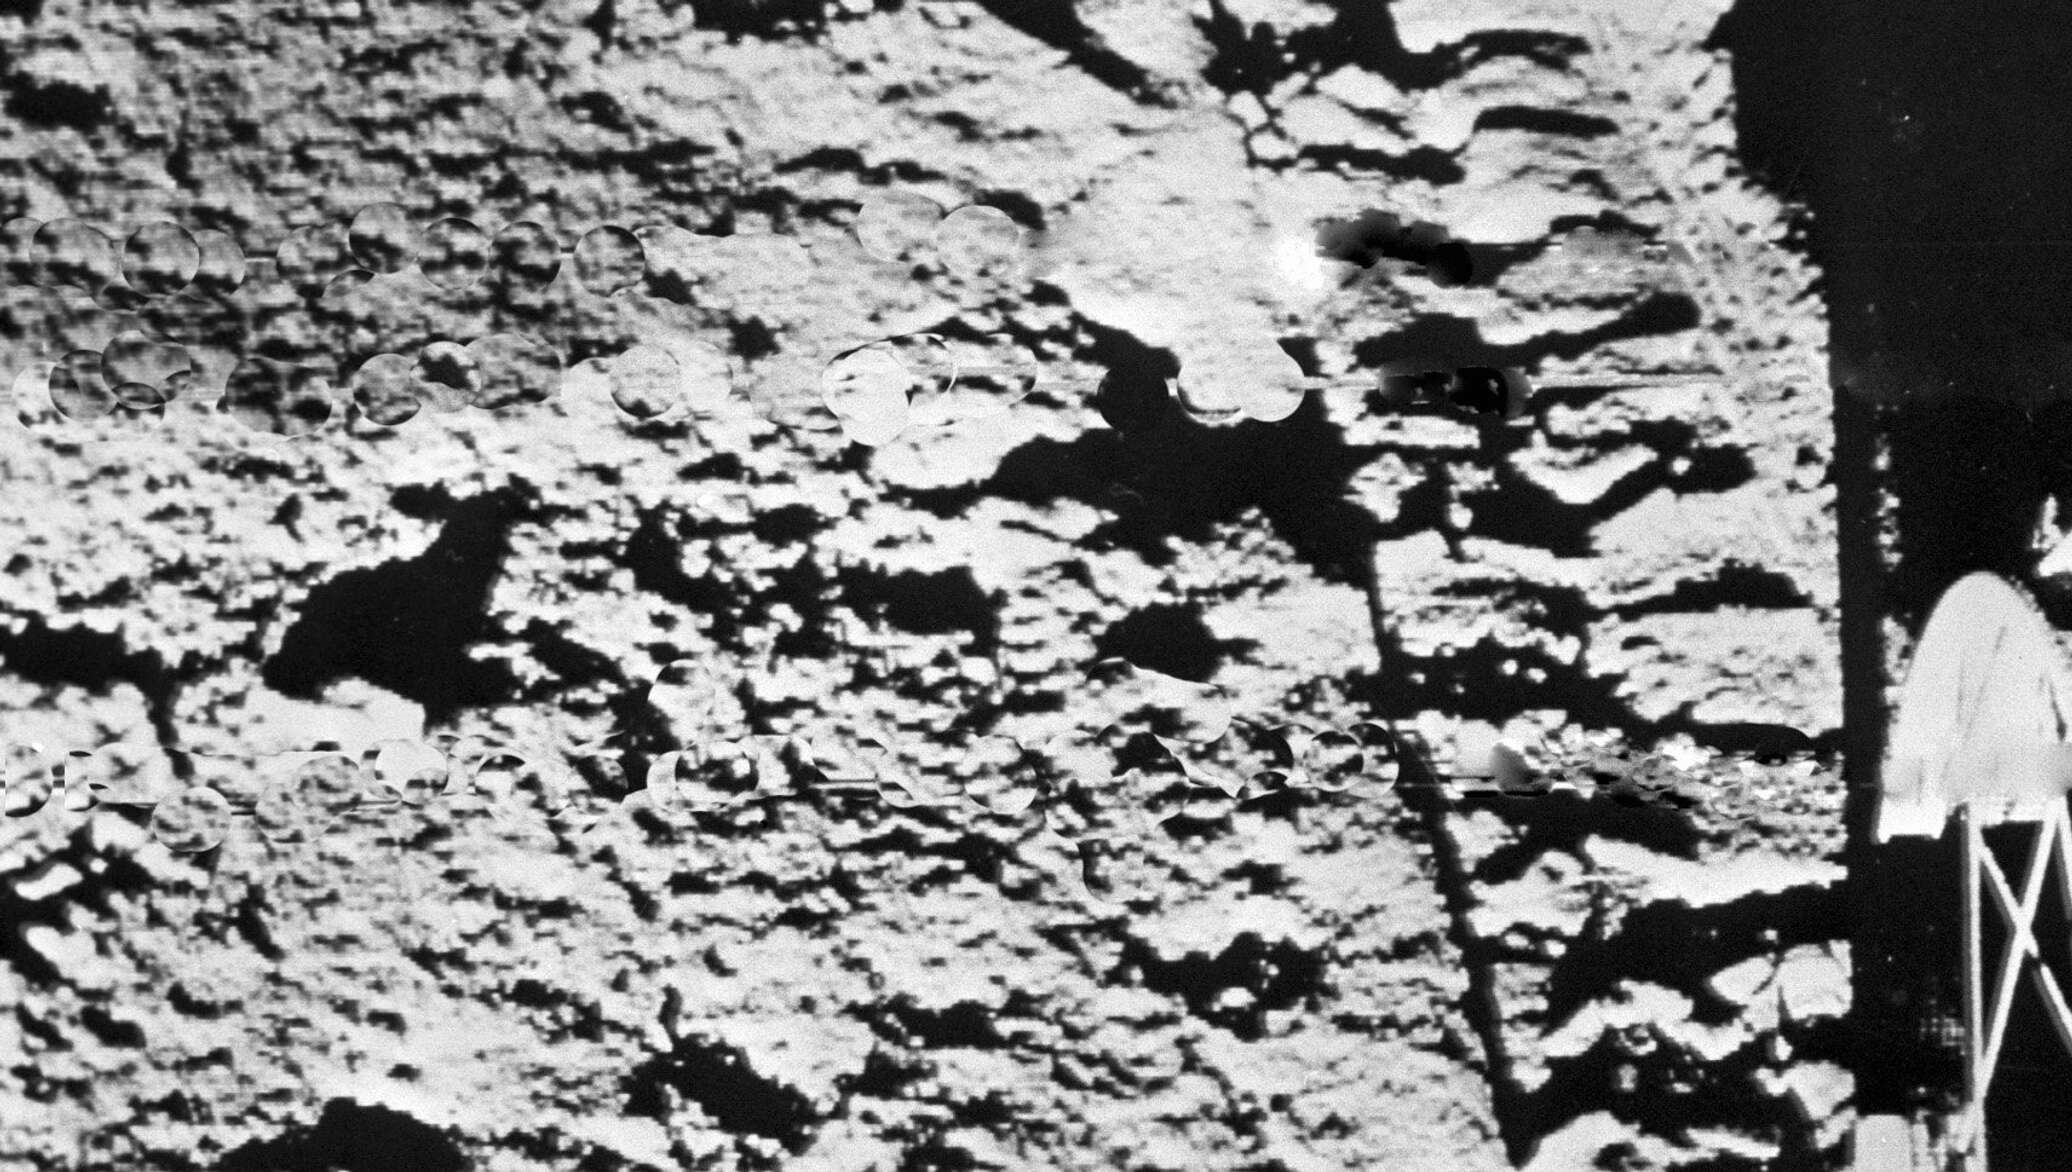 Следы луны 14 глава вк. Аполлон 17 НЛО. UFO Moon. Apollo 17 photo. Black Knight Satellite Art.